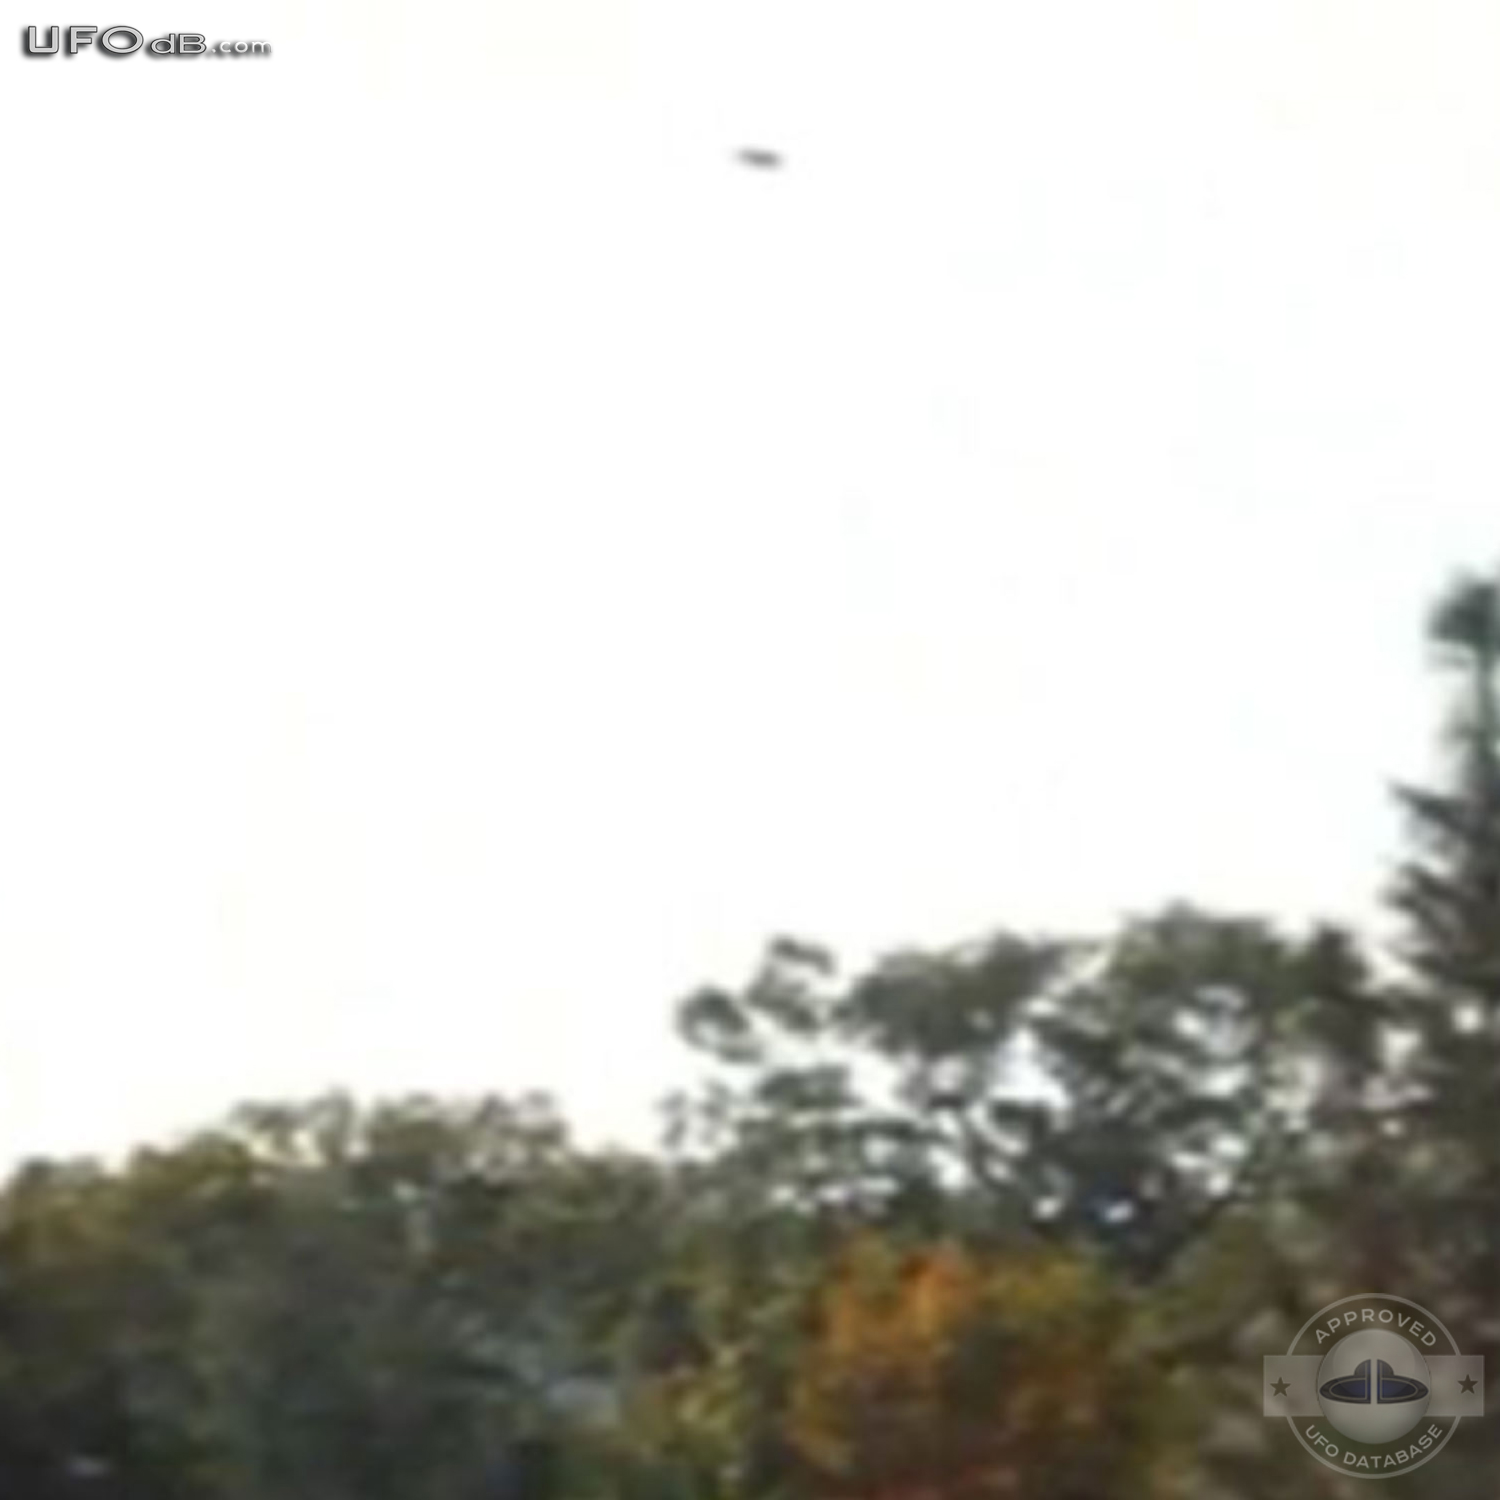 Camera test captures UFO in the sky in Mimon, Liberec, Czech Republic UFO Picture #371-2